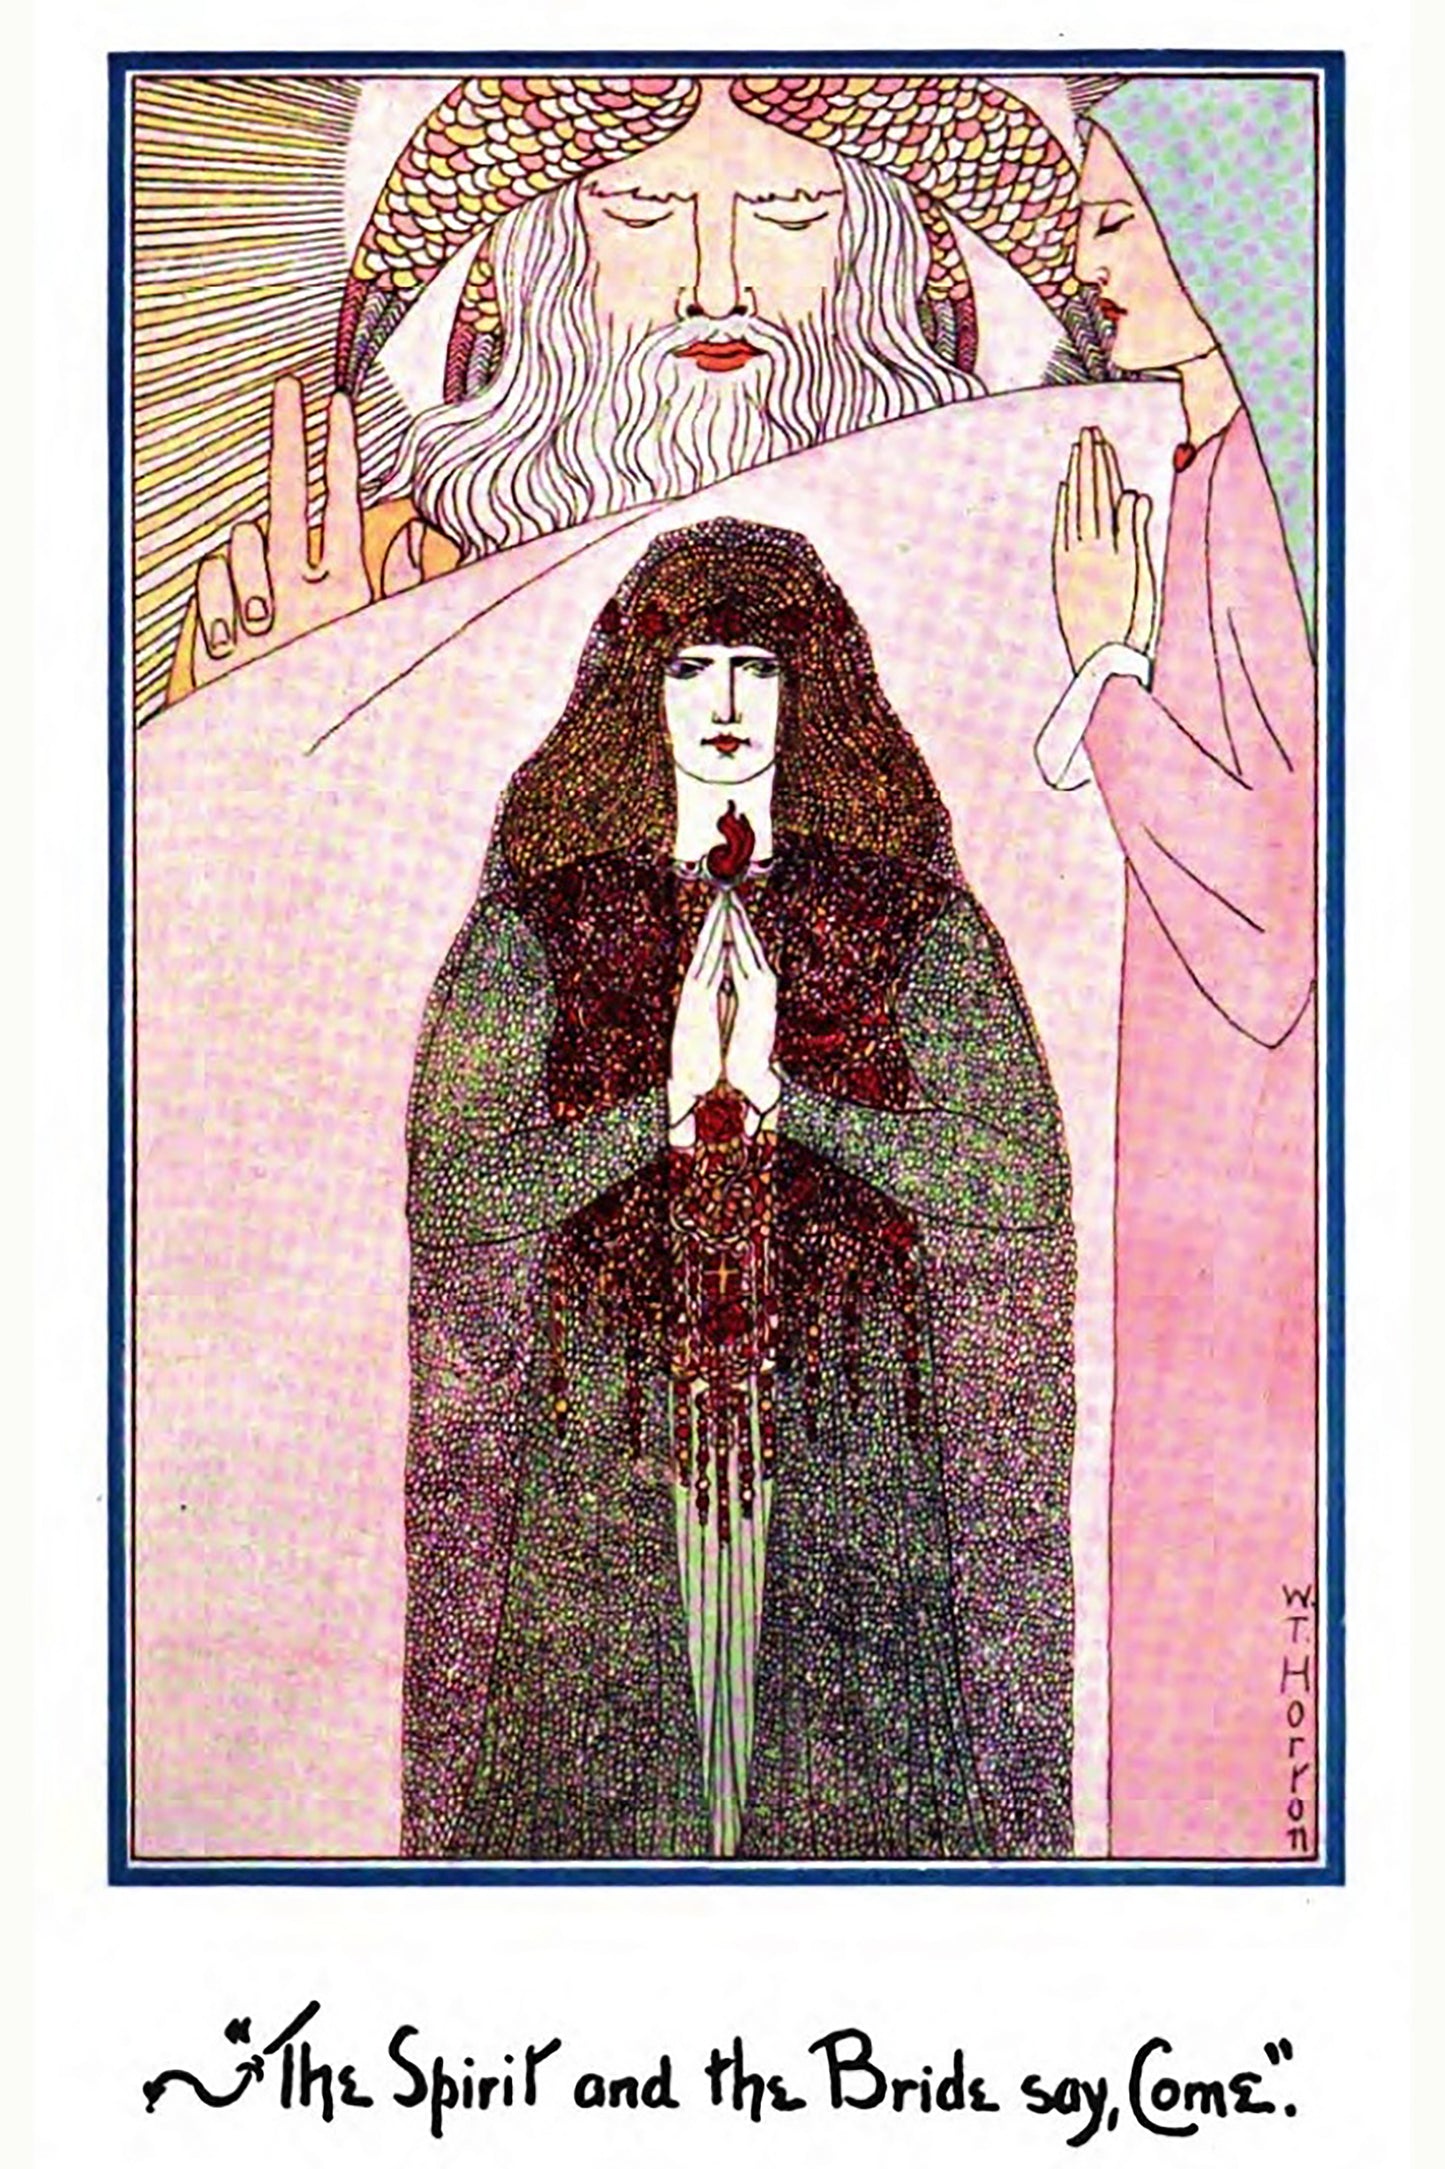 Design by W.T. Horton William Thomas Horton, 1908 - Postcard